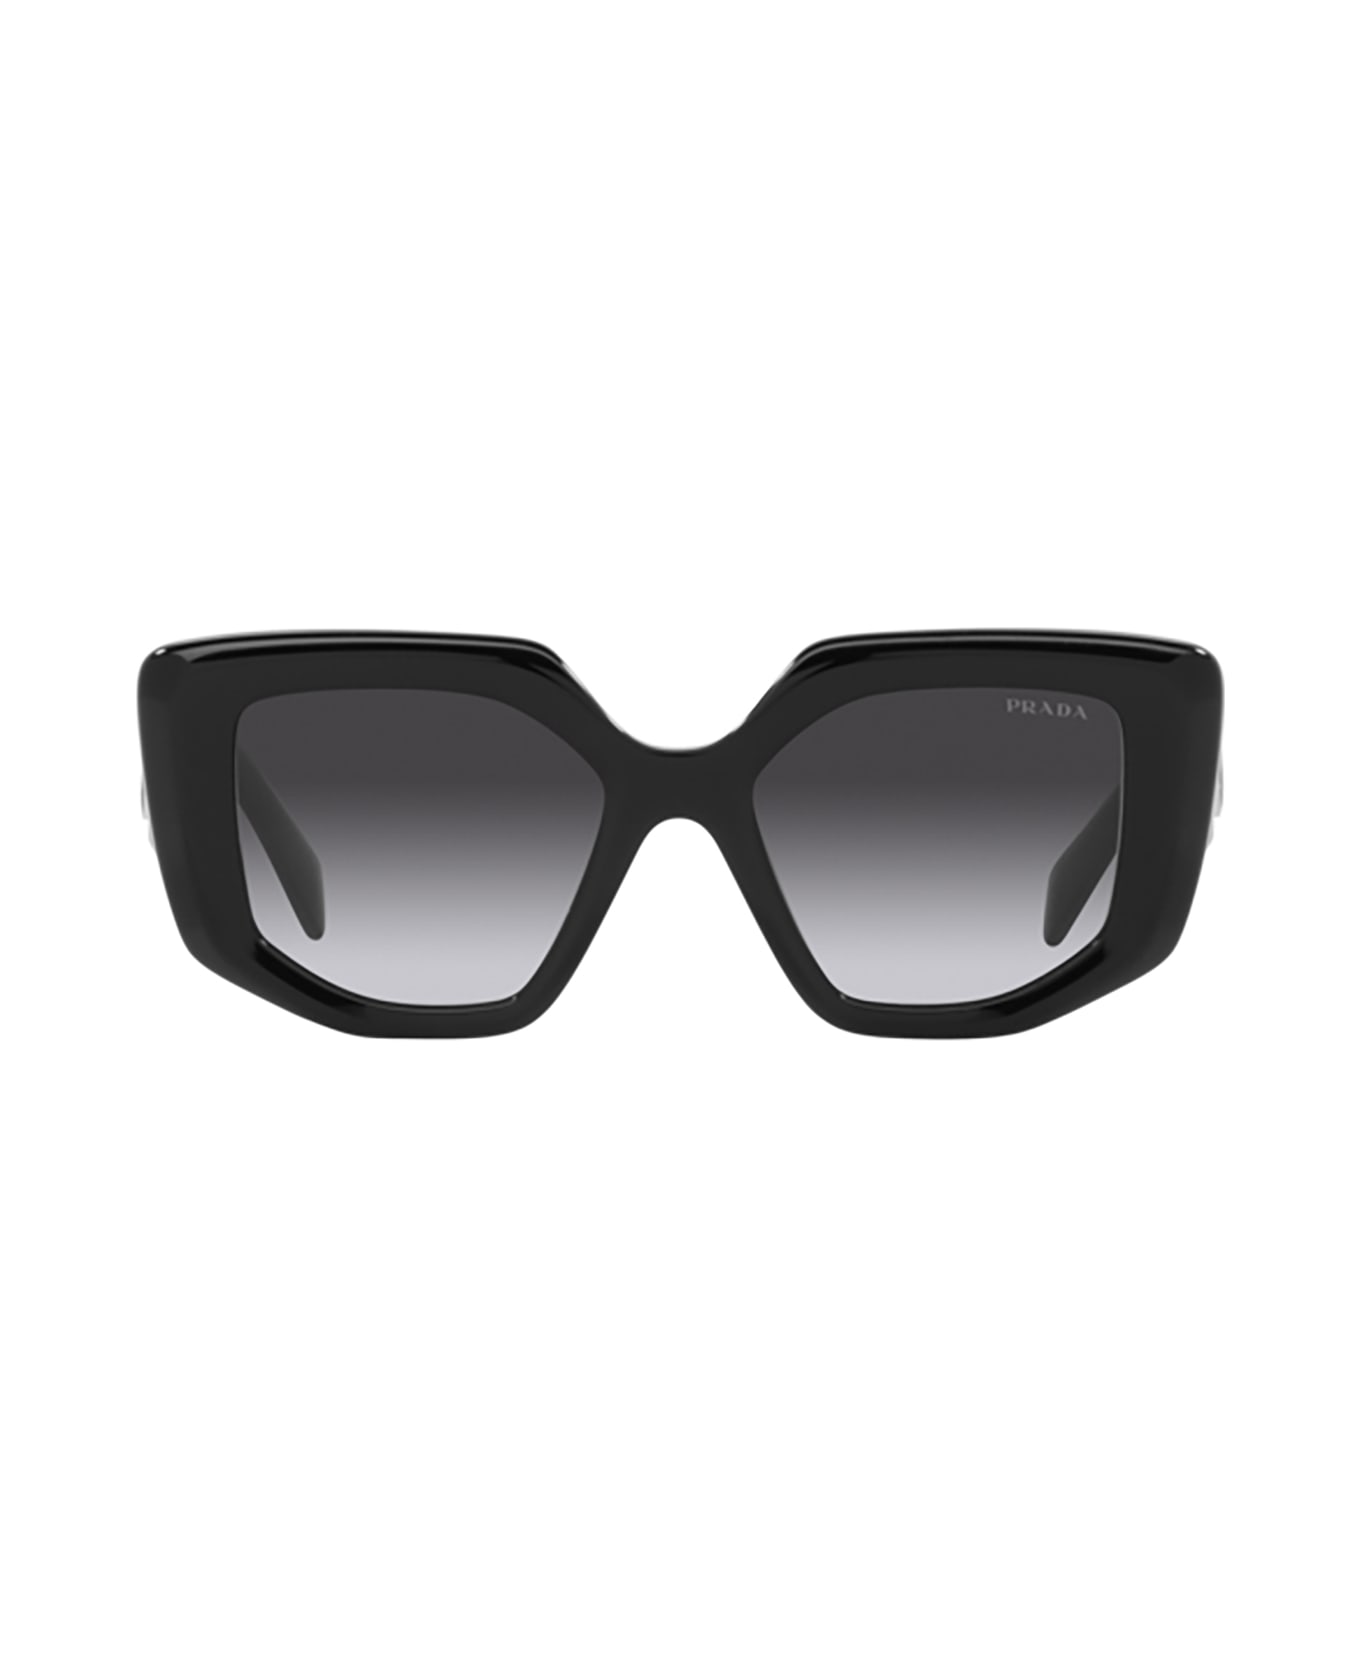 Prada Eyewear Pr 14zs Black Sunglasses - Black